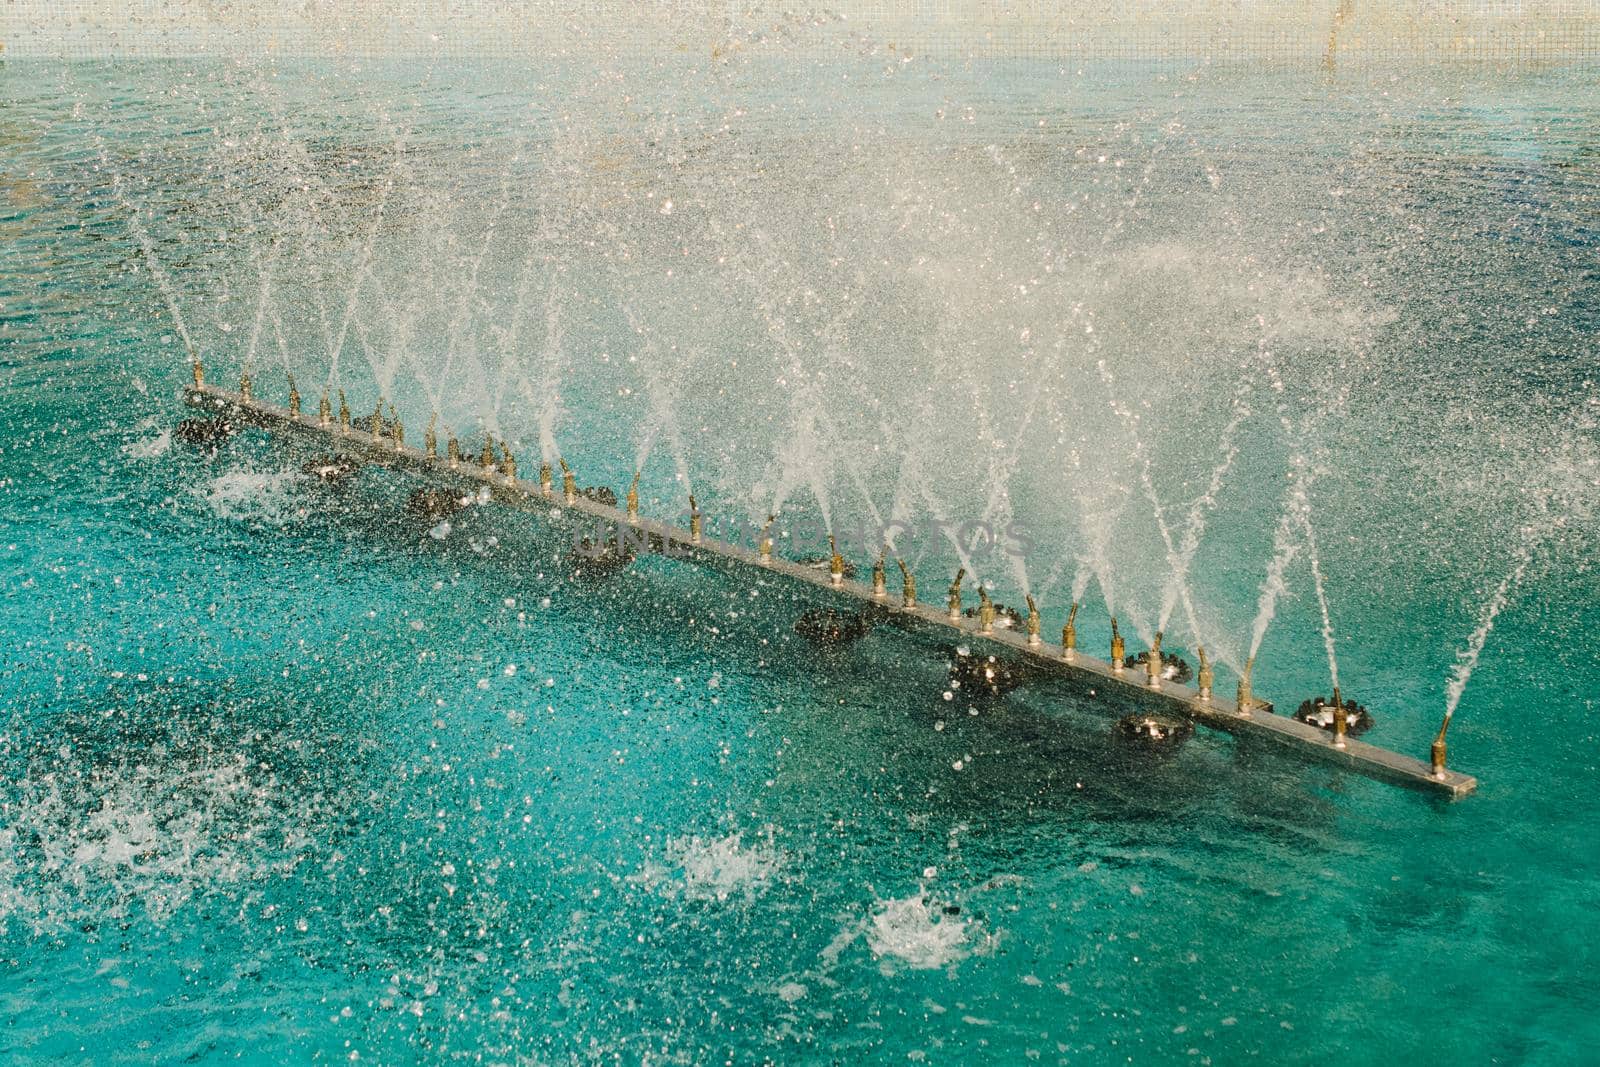 A water fountain sprinkling water on display by berkay